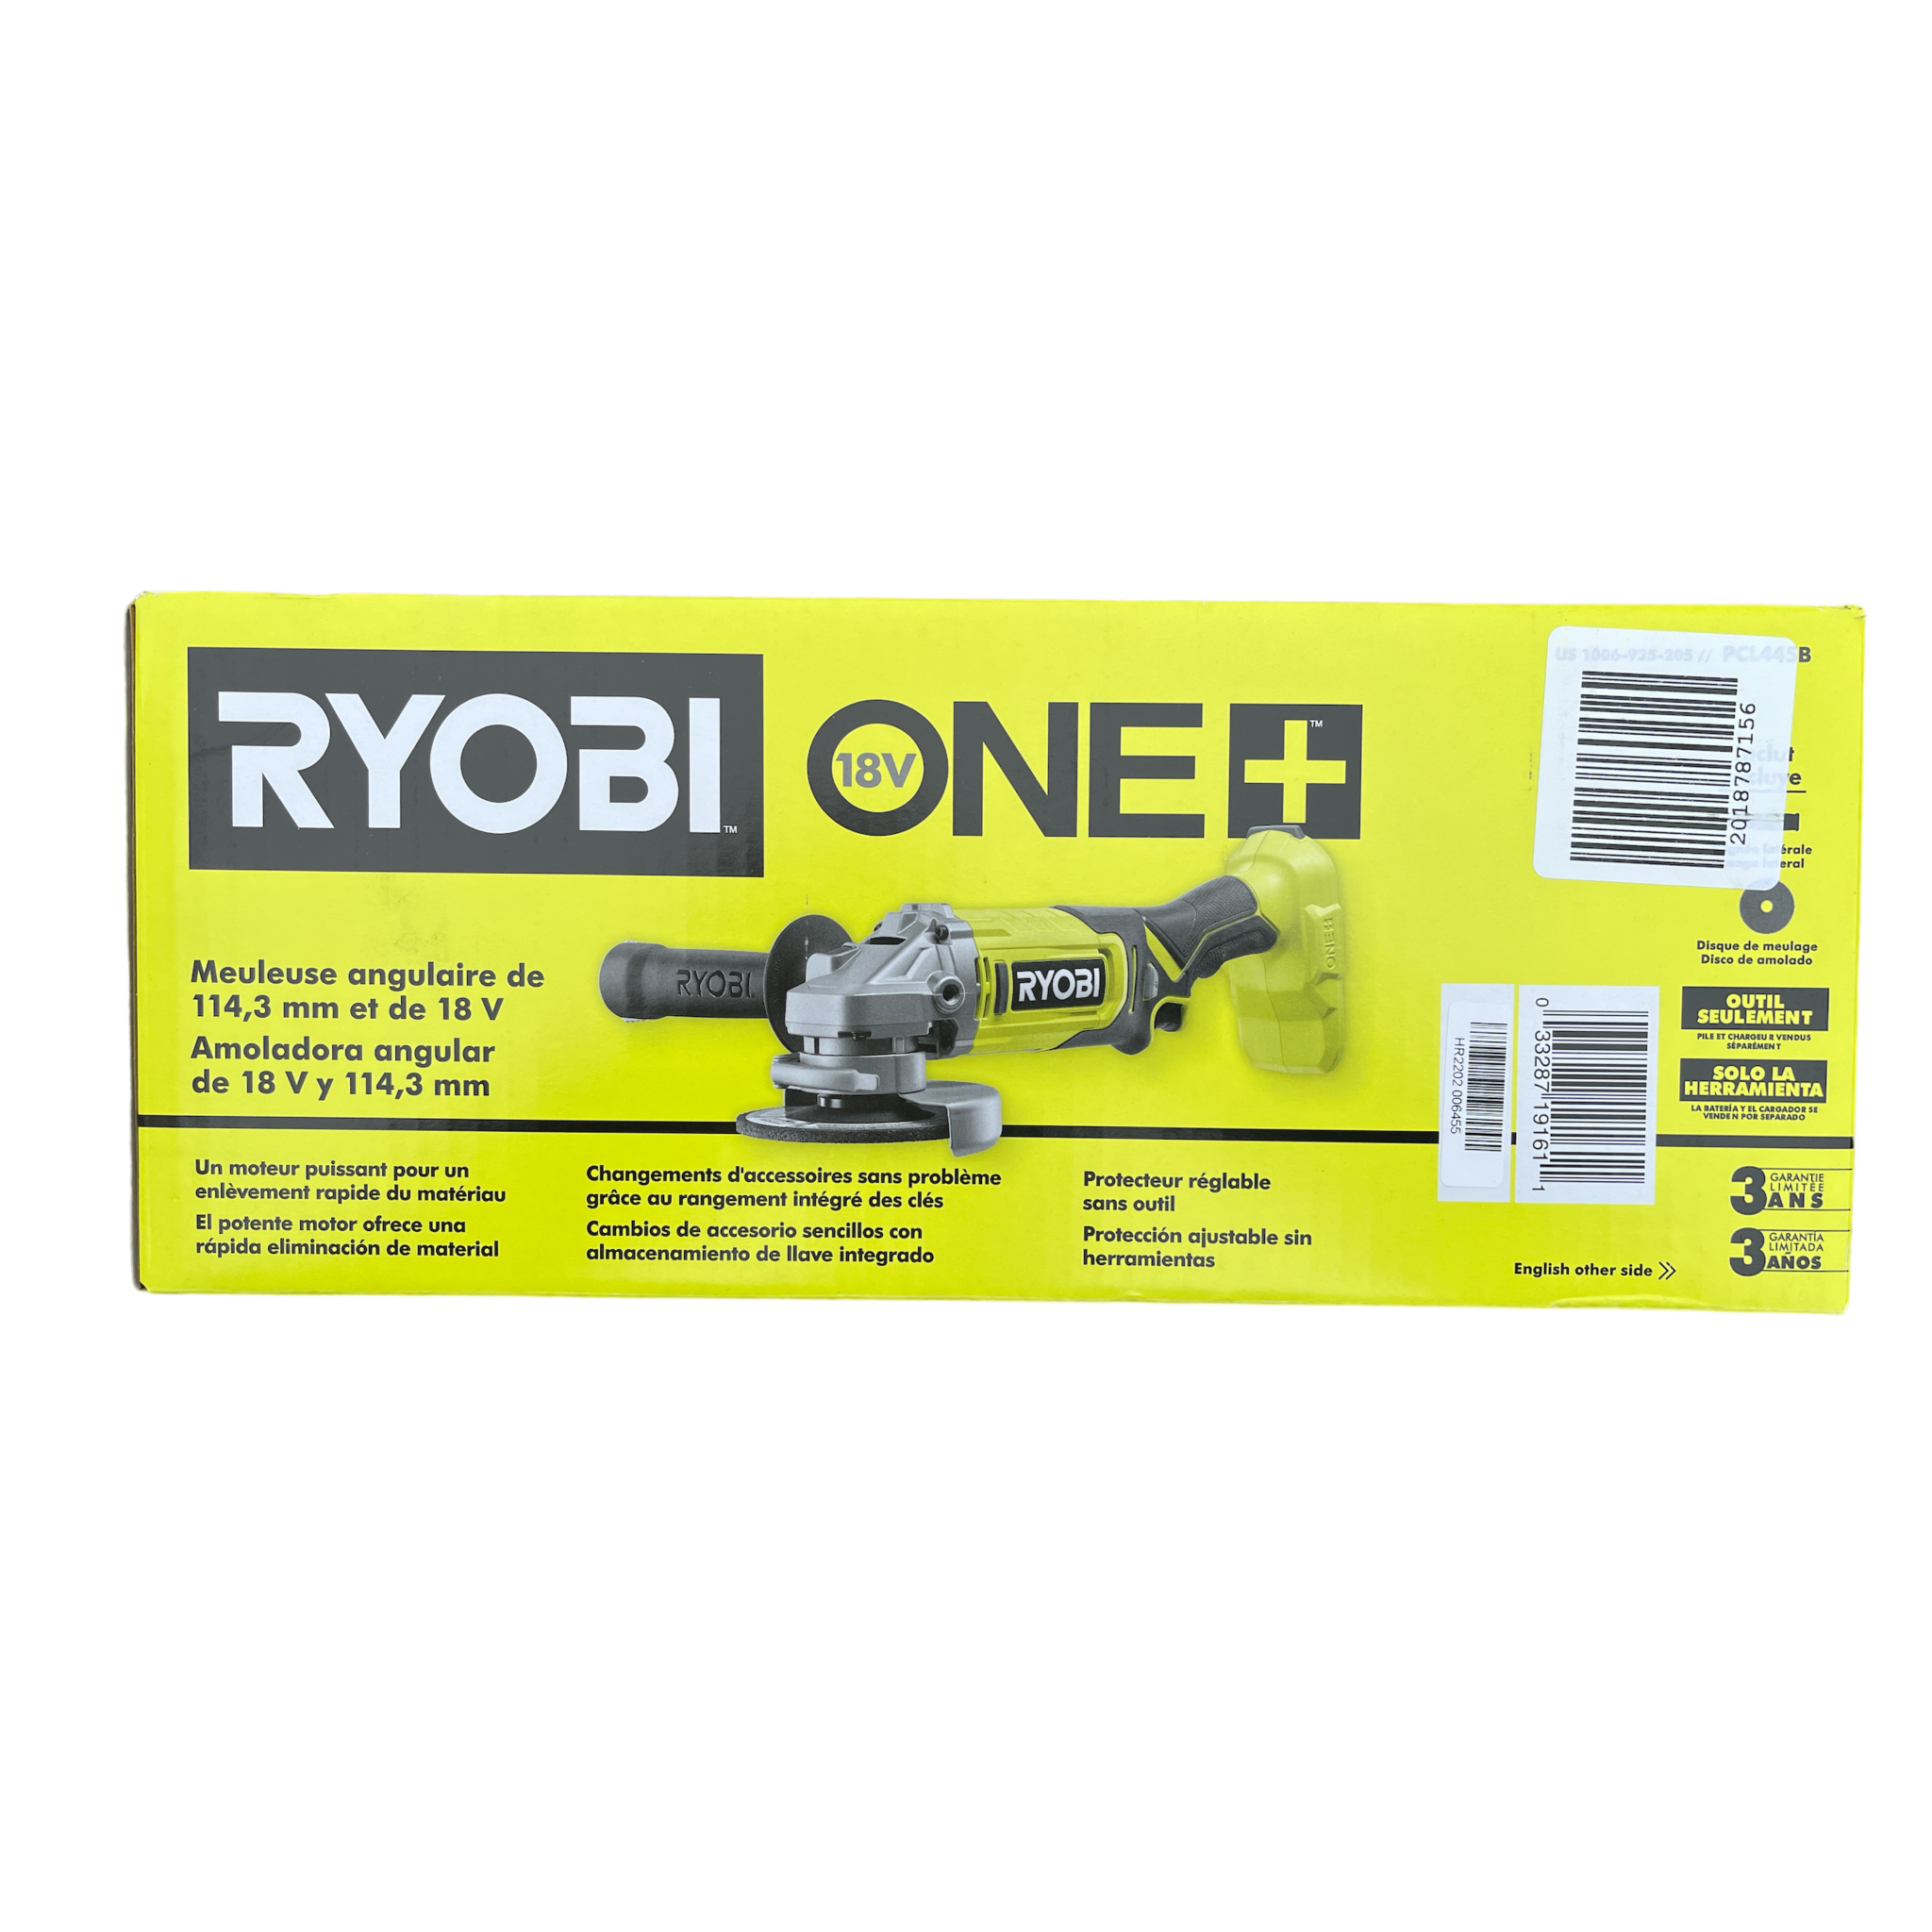 18V ONE+ 4 1/2 Angle Grinder - RYOBI Tools